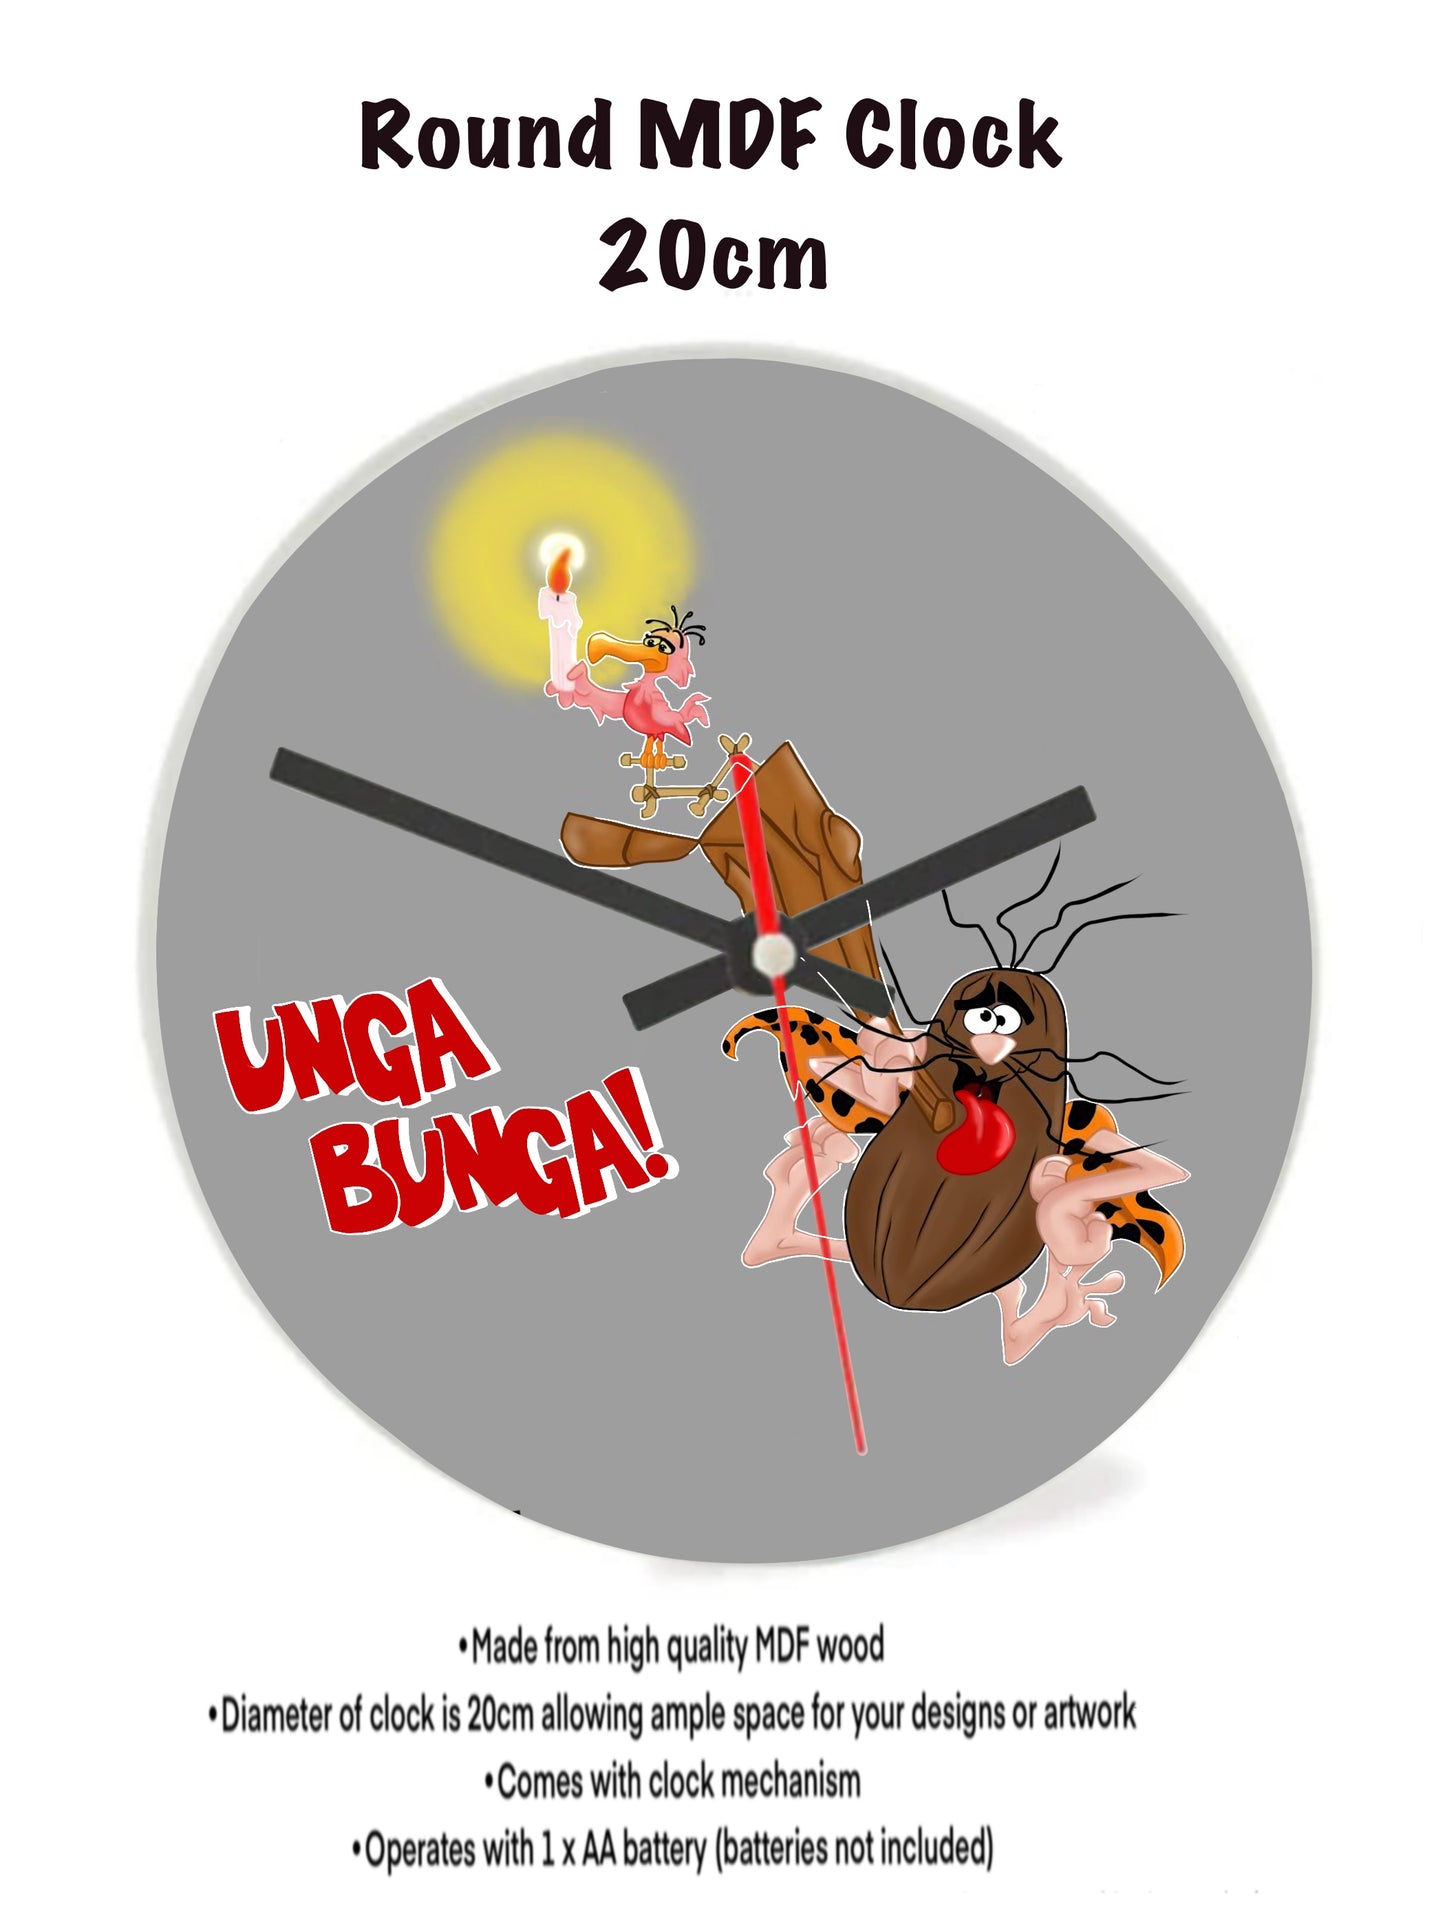 Captain Caveman Clocks Ungainly Bunga!